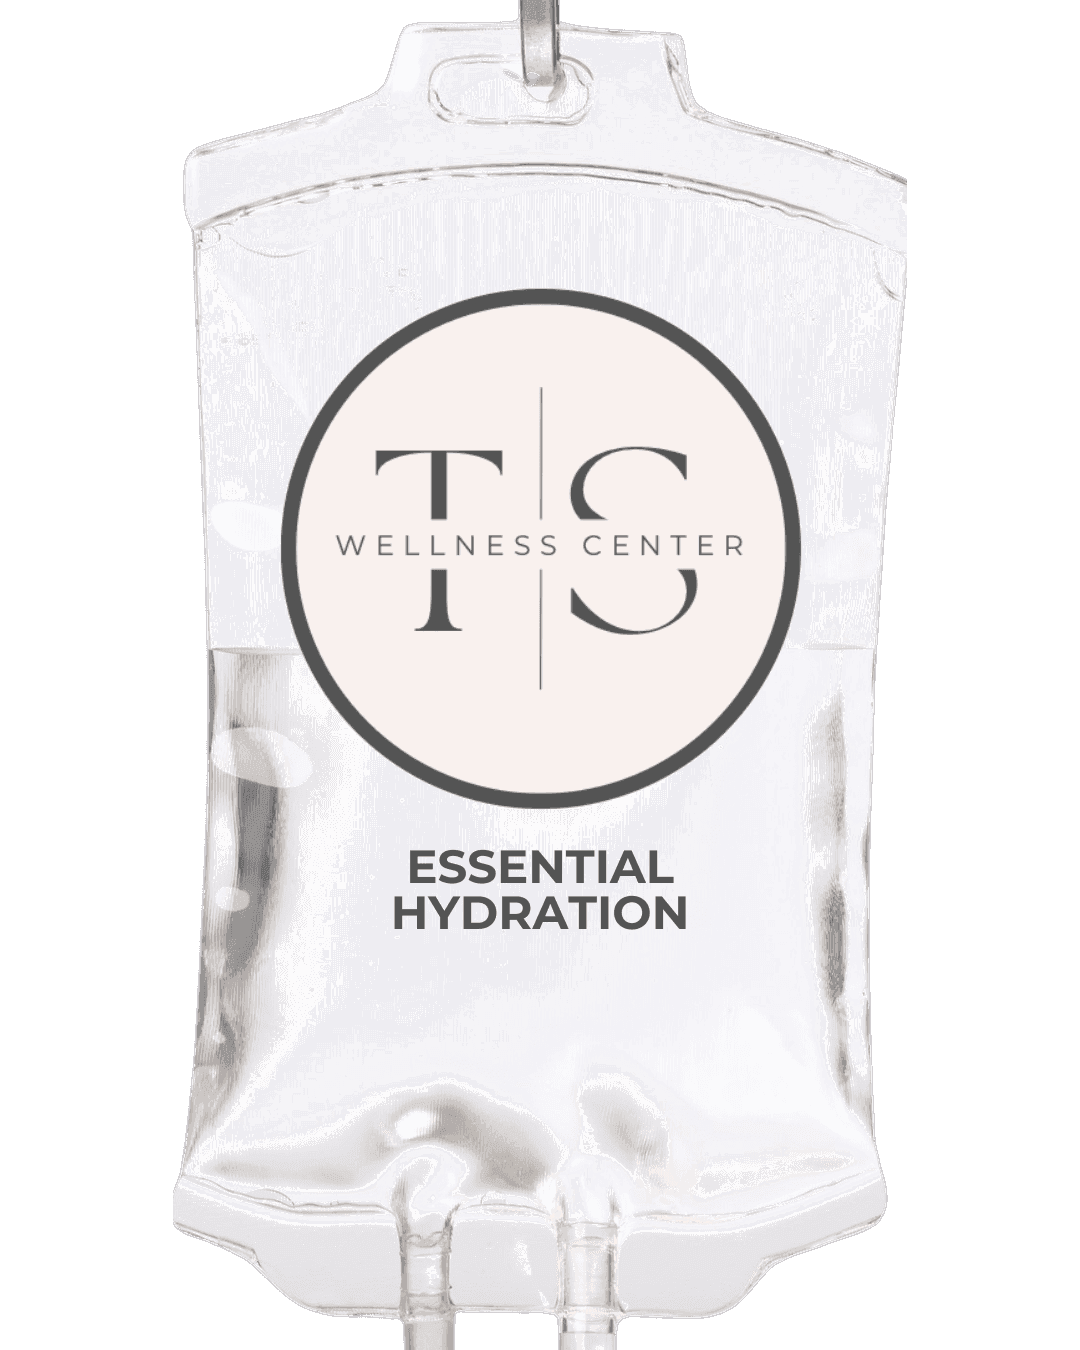 essential hydration iv infusion tarpon springs wellness center